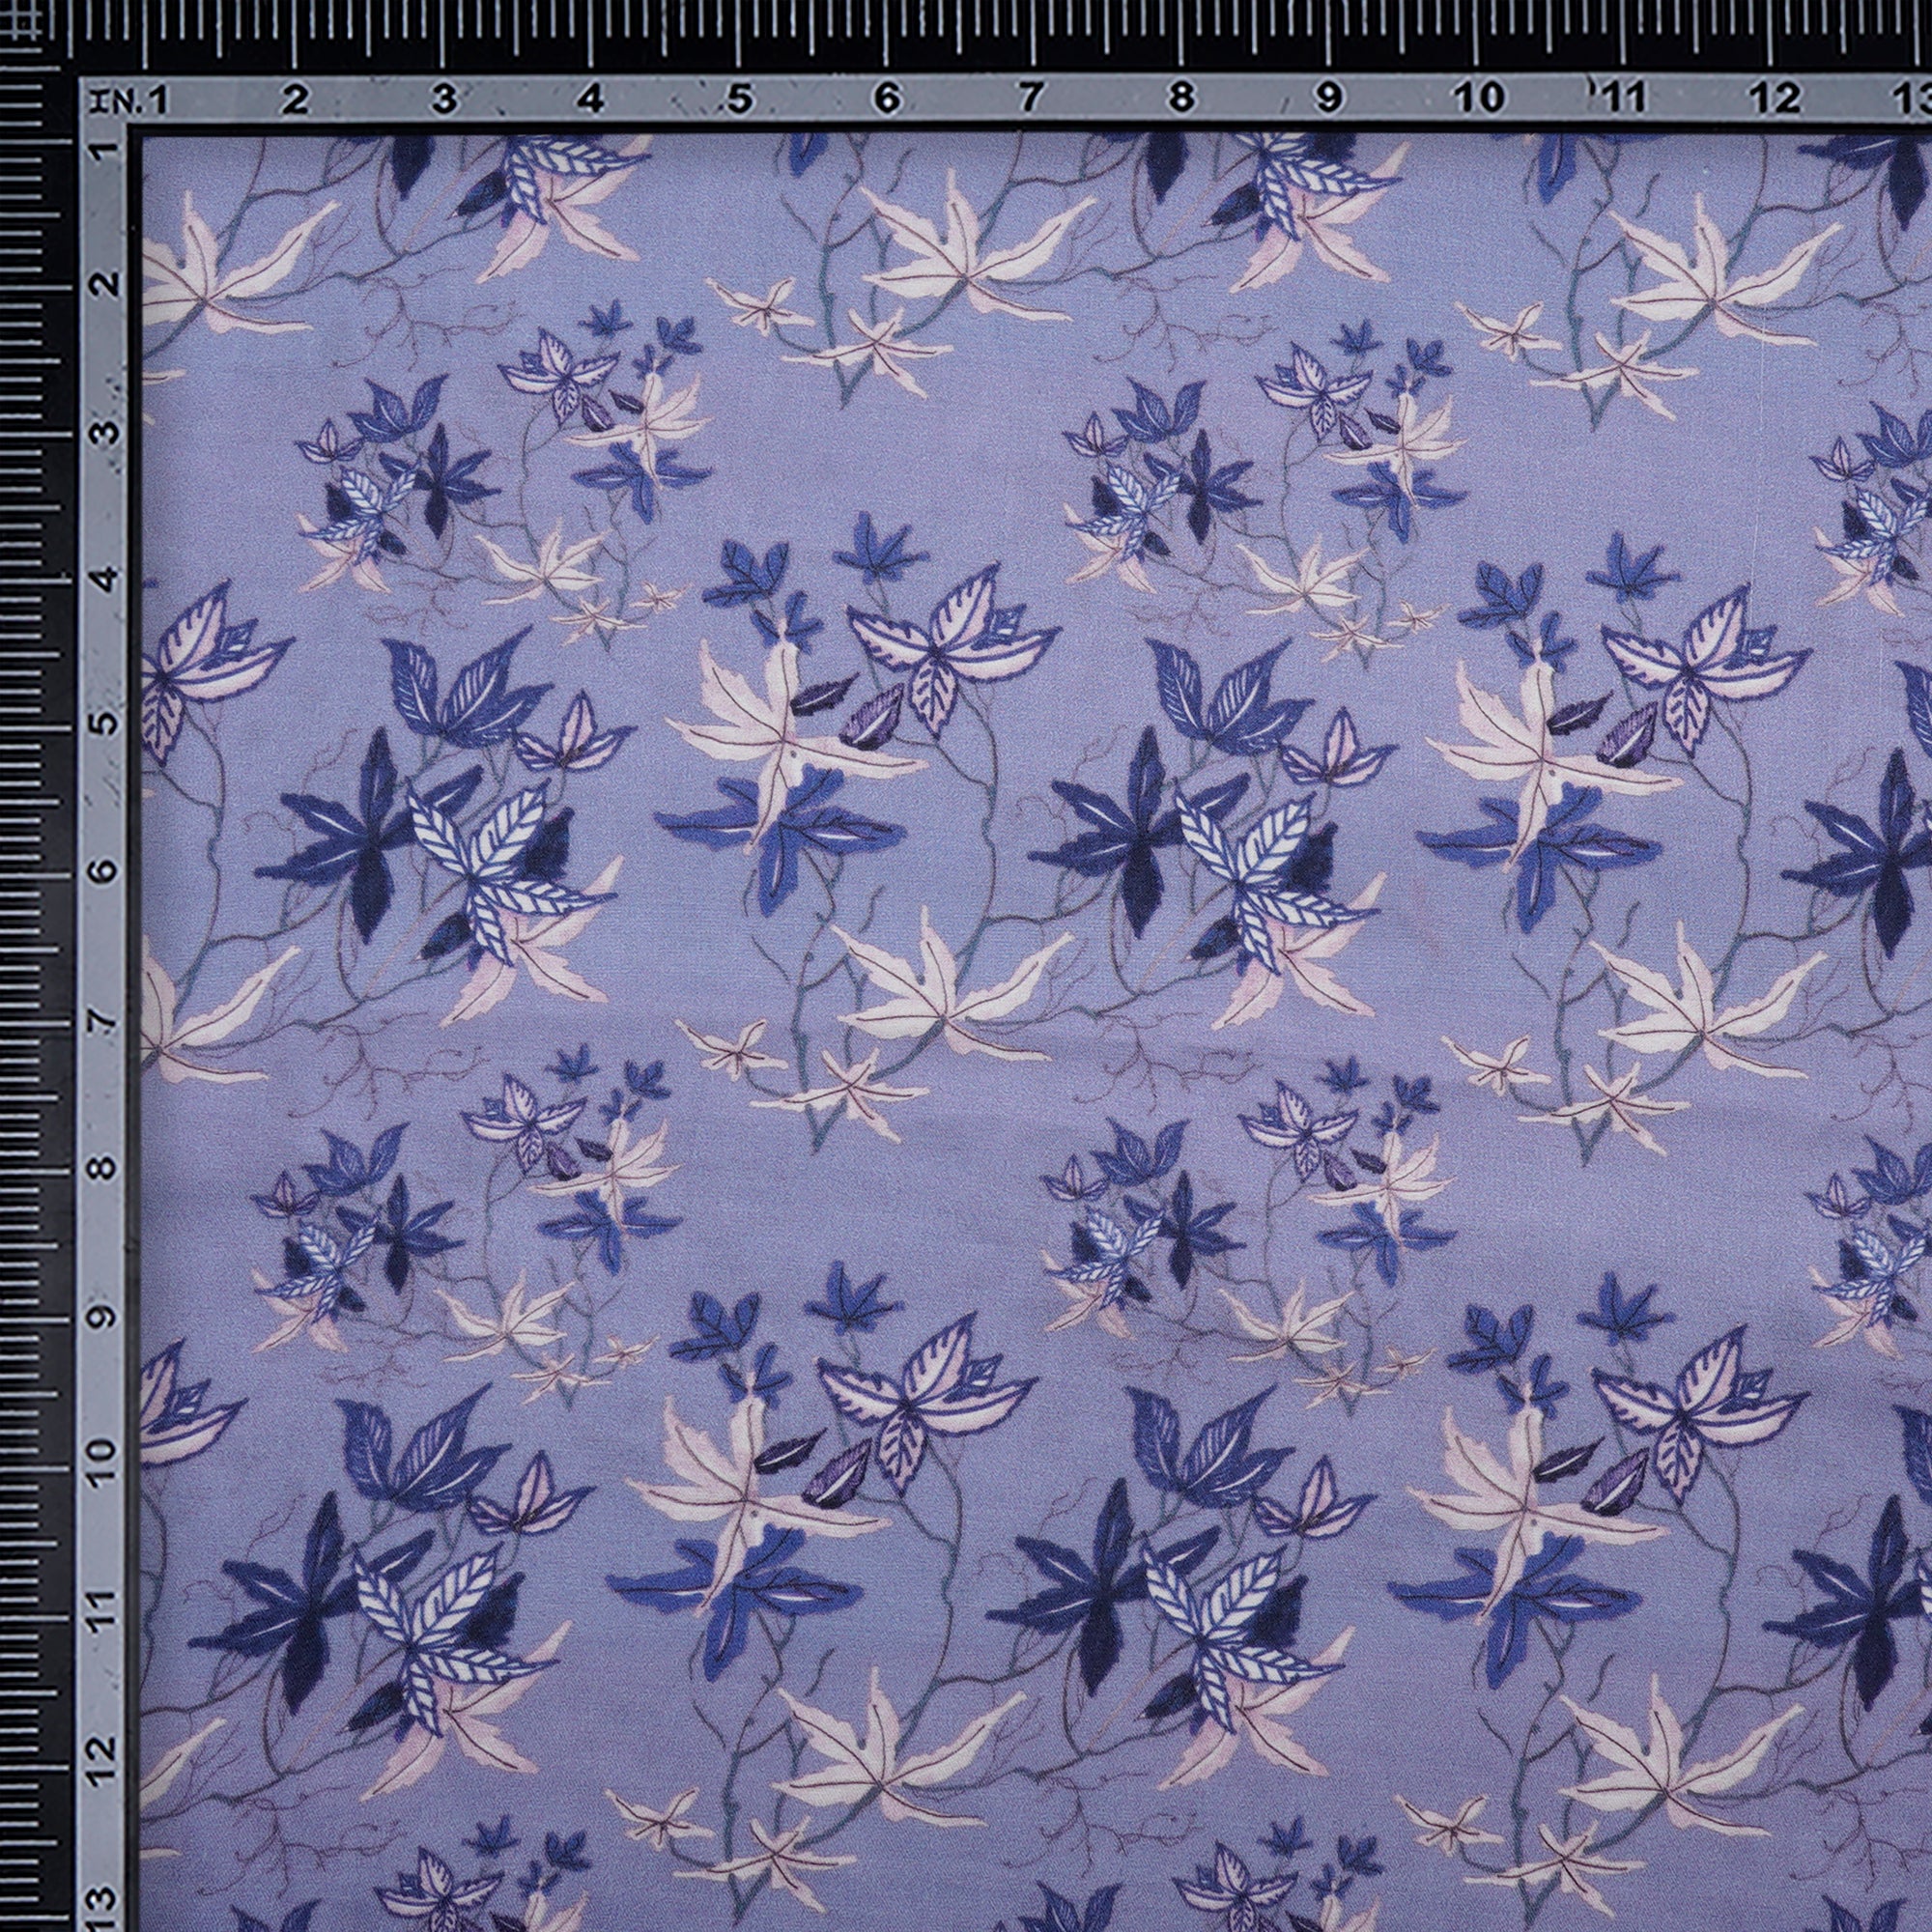 Blue Lotus Color Digital Printed Modal Satin Fabric